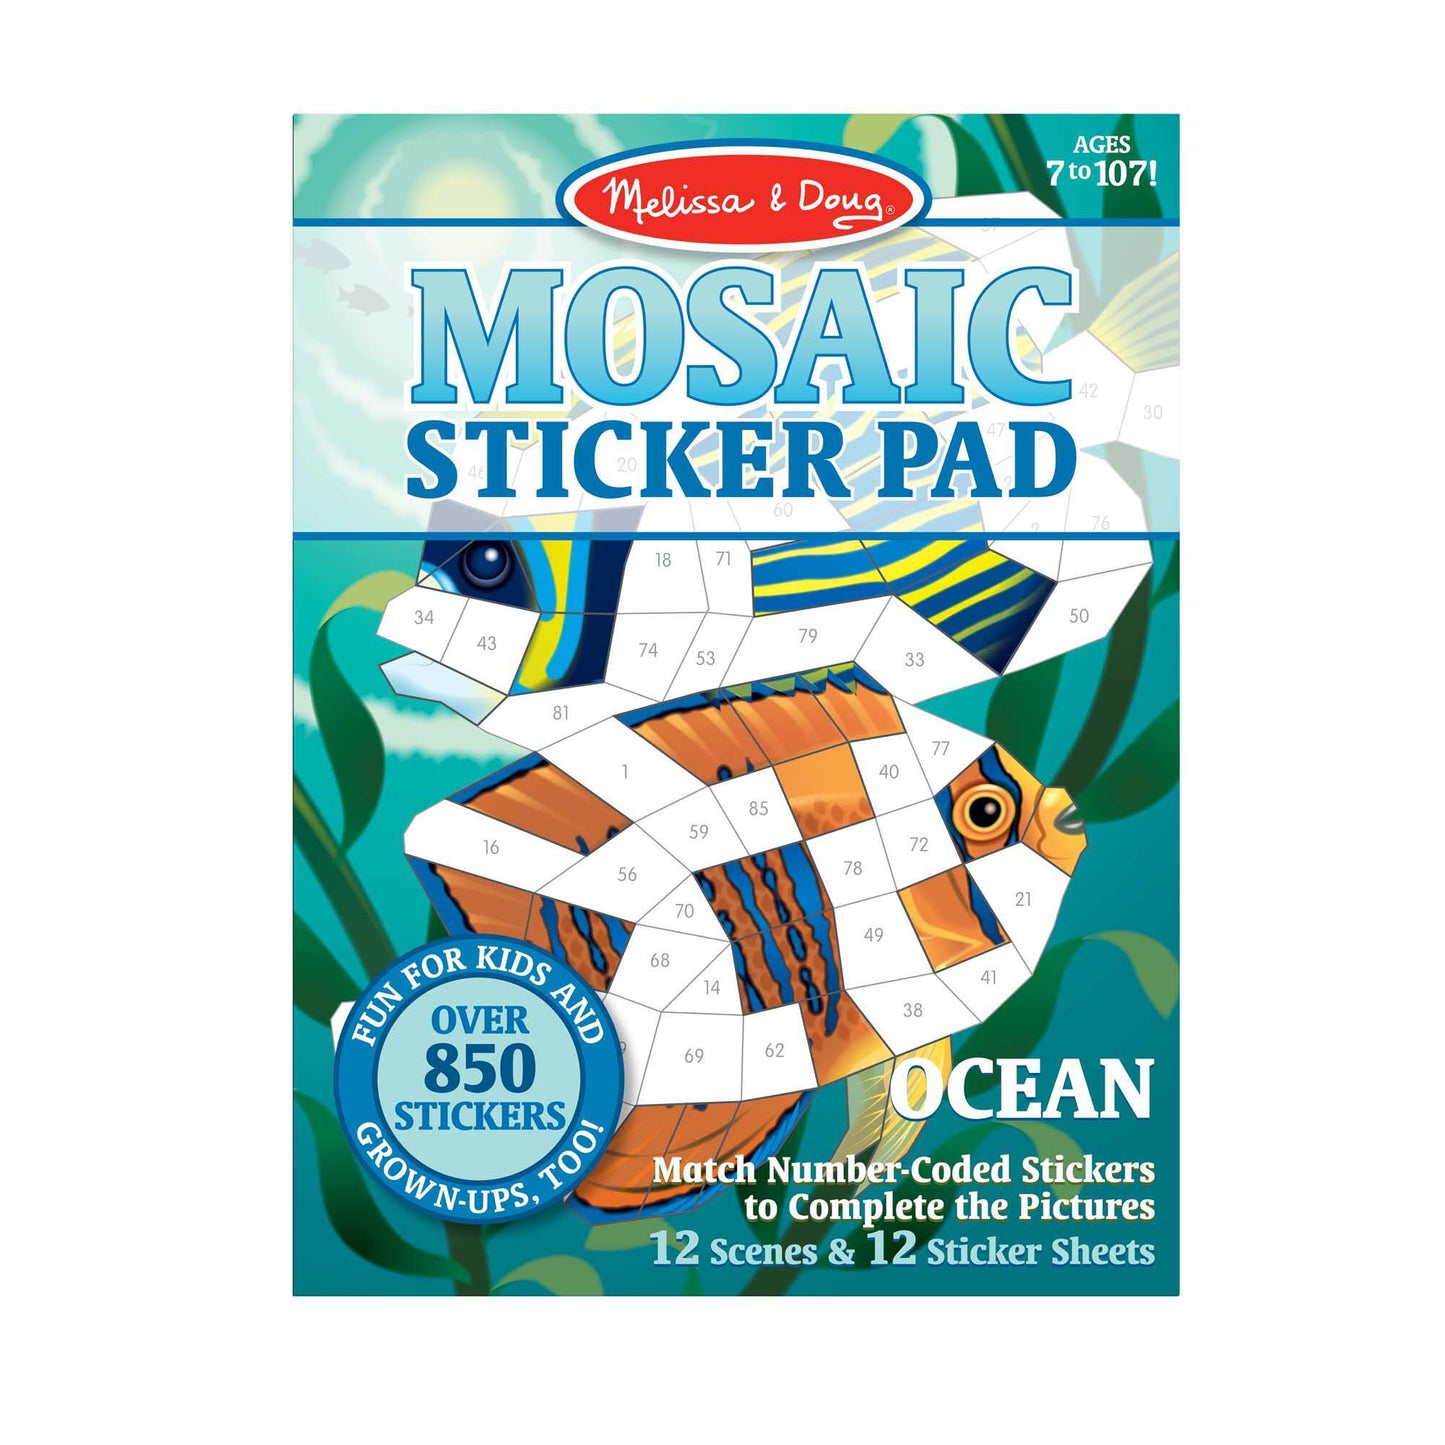 Stickers - Mosaic Sticker Pad